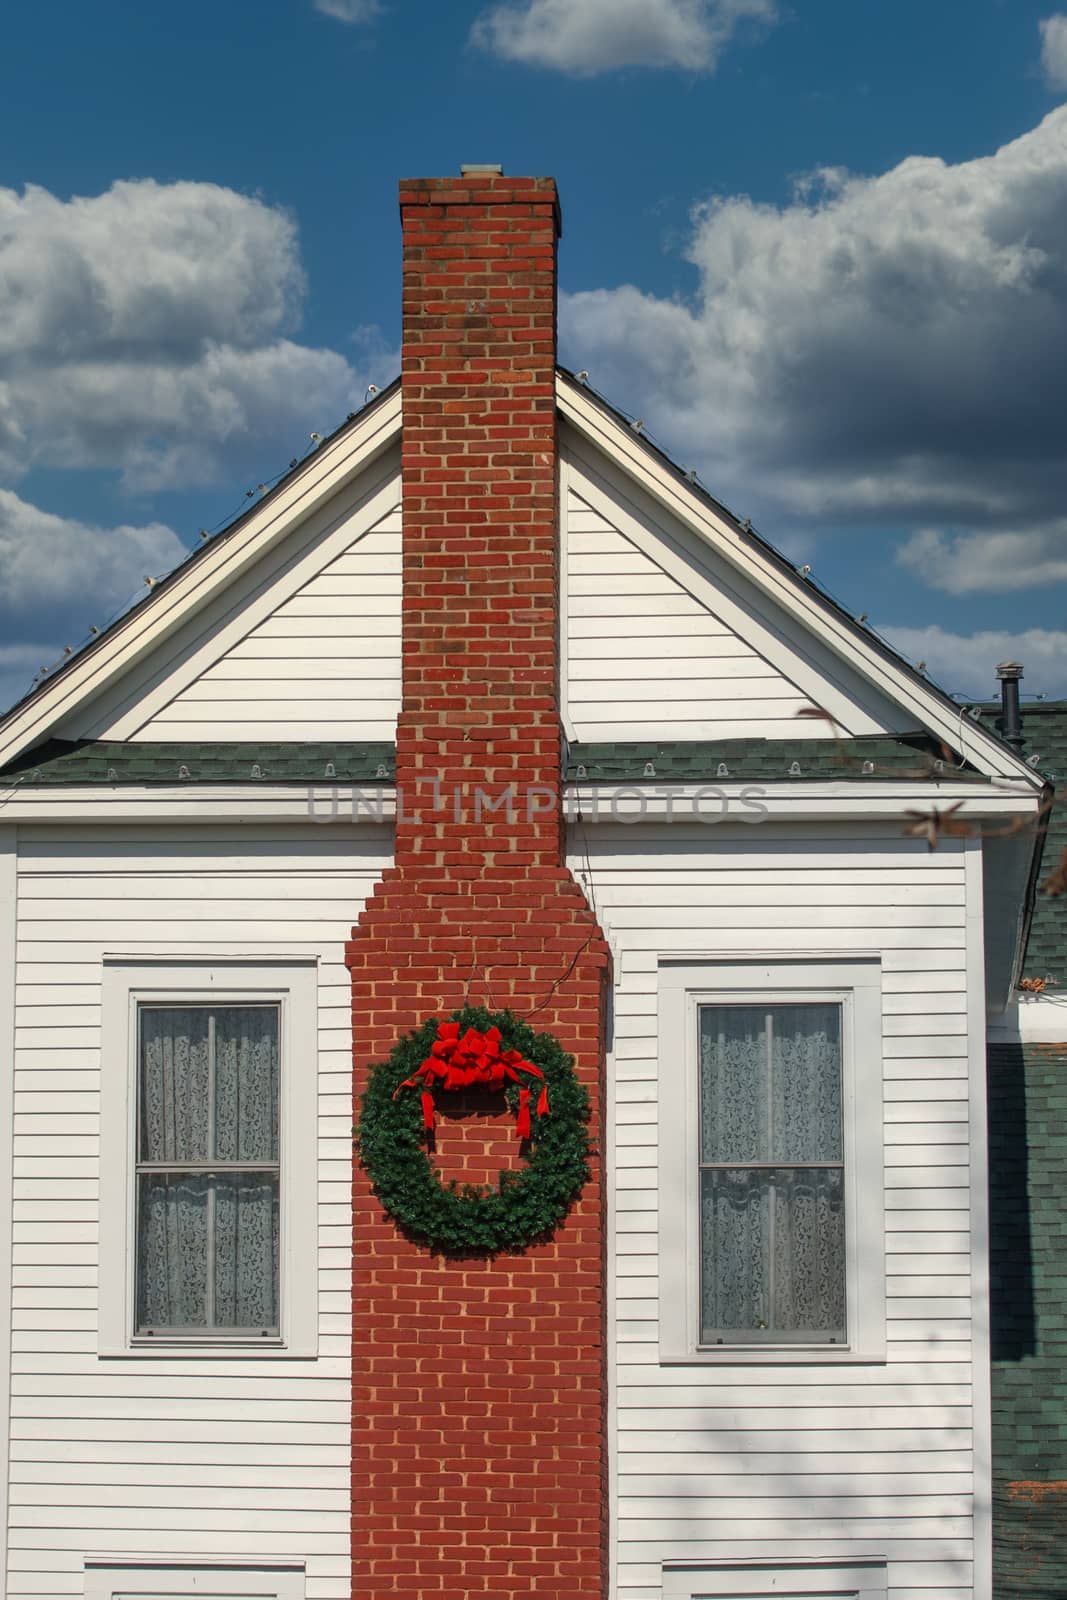 White Farmhouse with Christmas Wreath on Brick Chimney by dbvirago